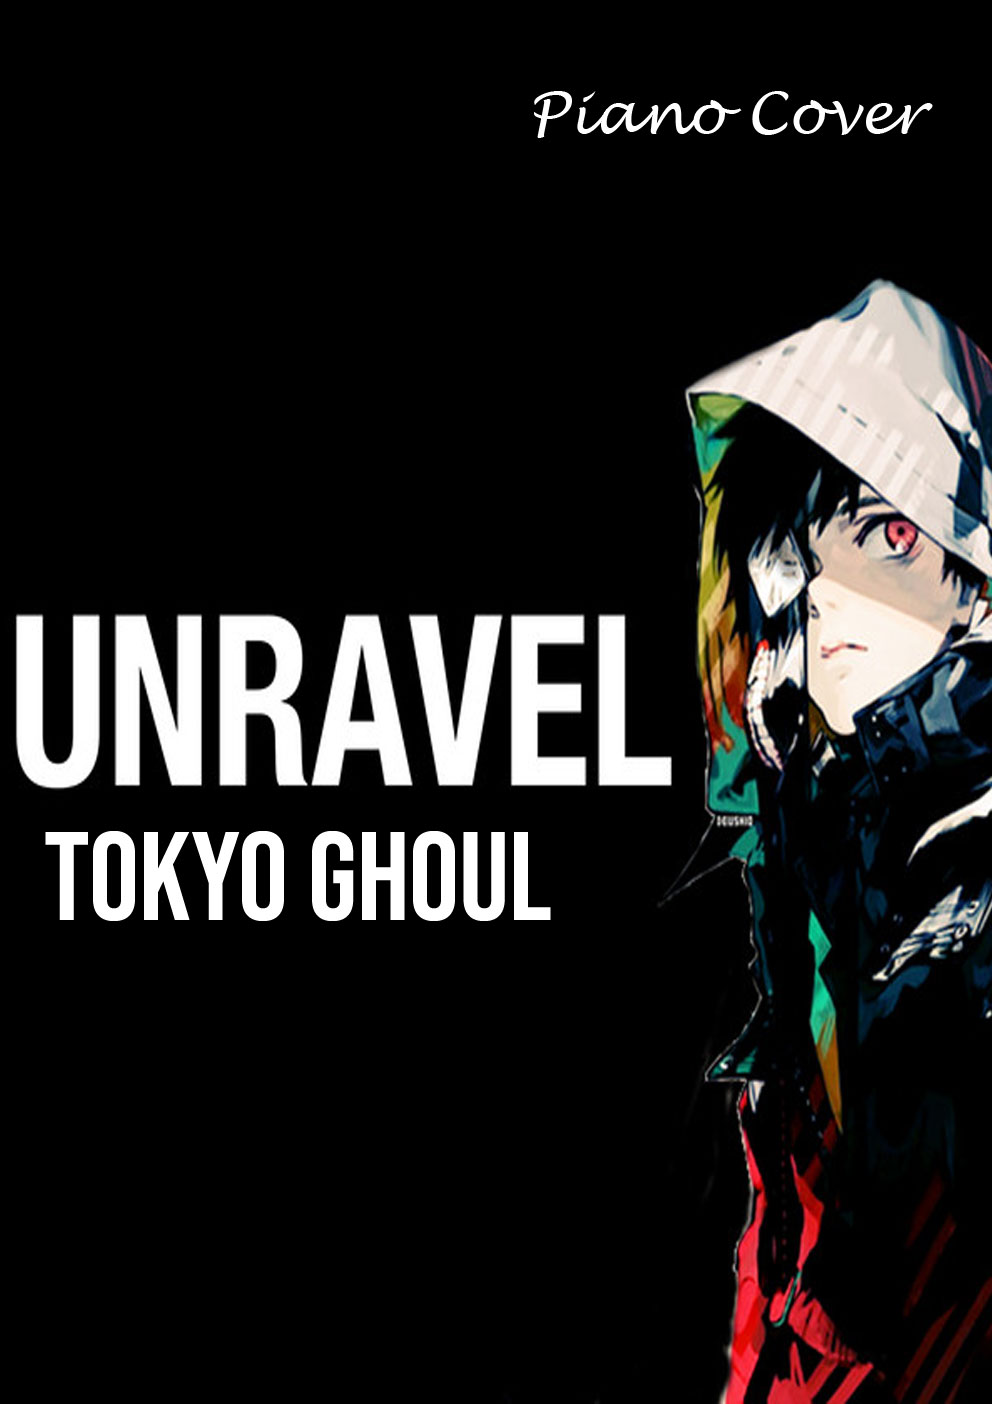 Ghoul op tokyo OST Tokyo